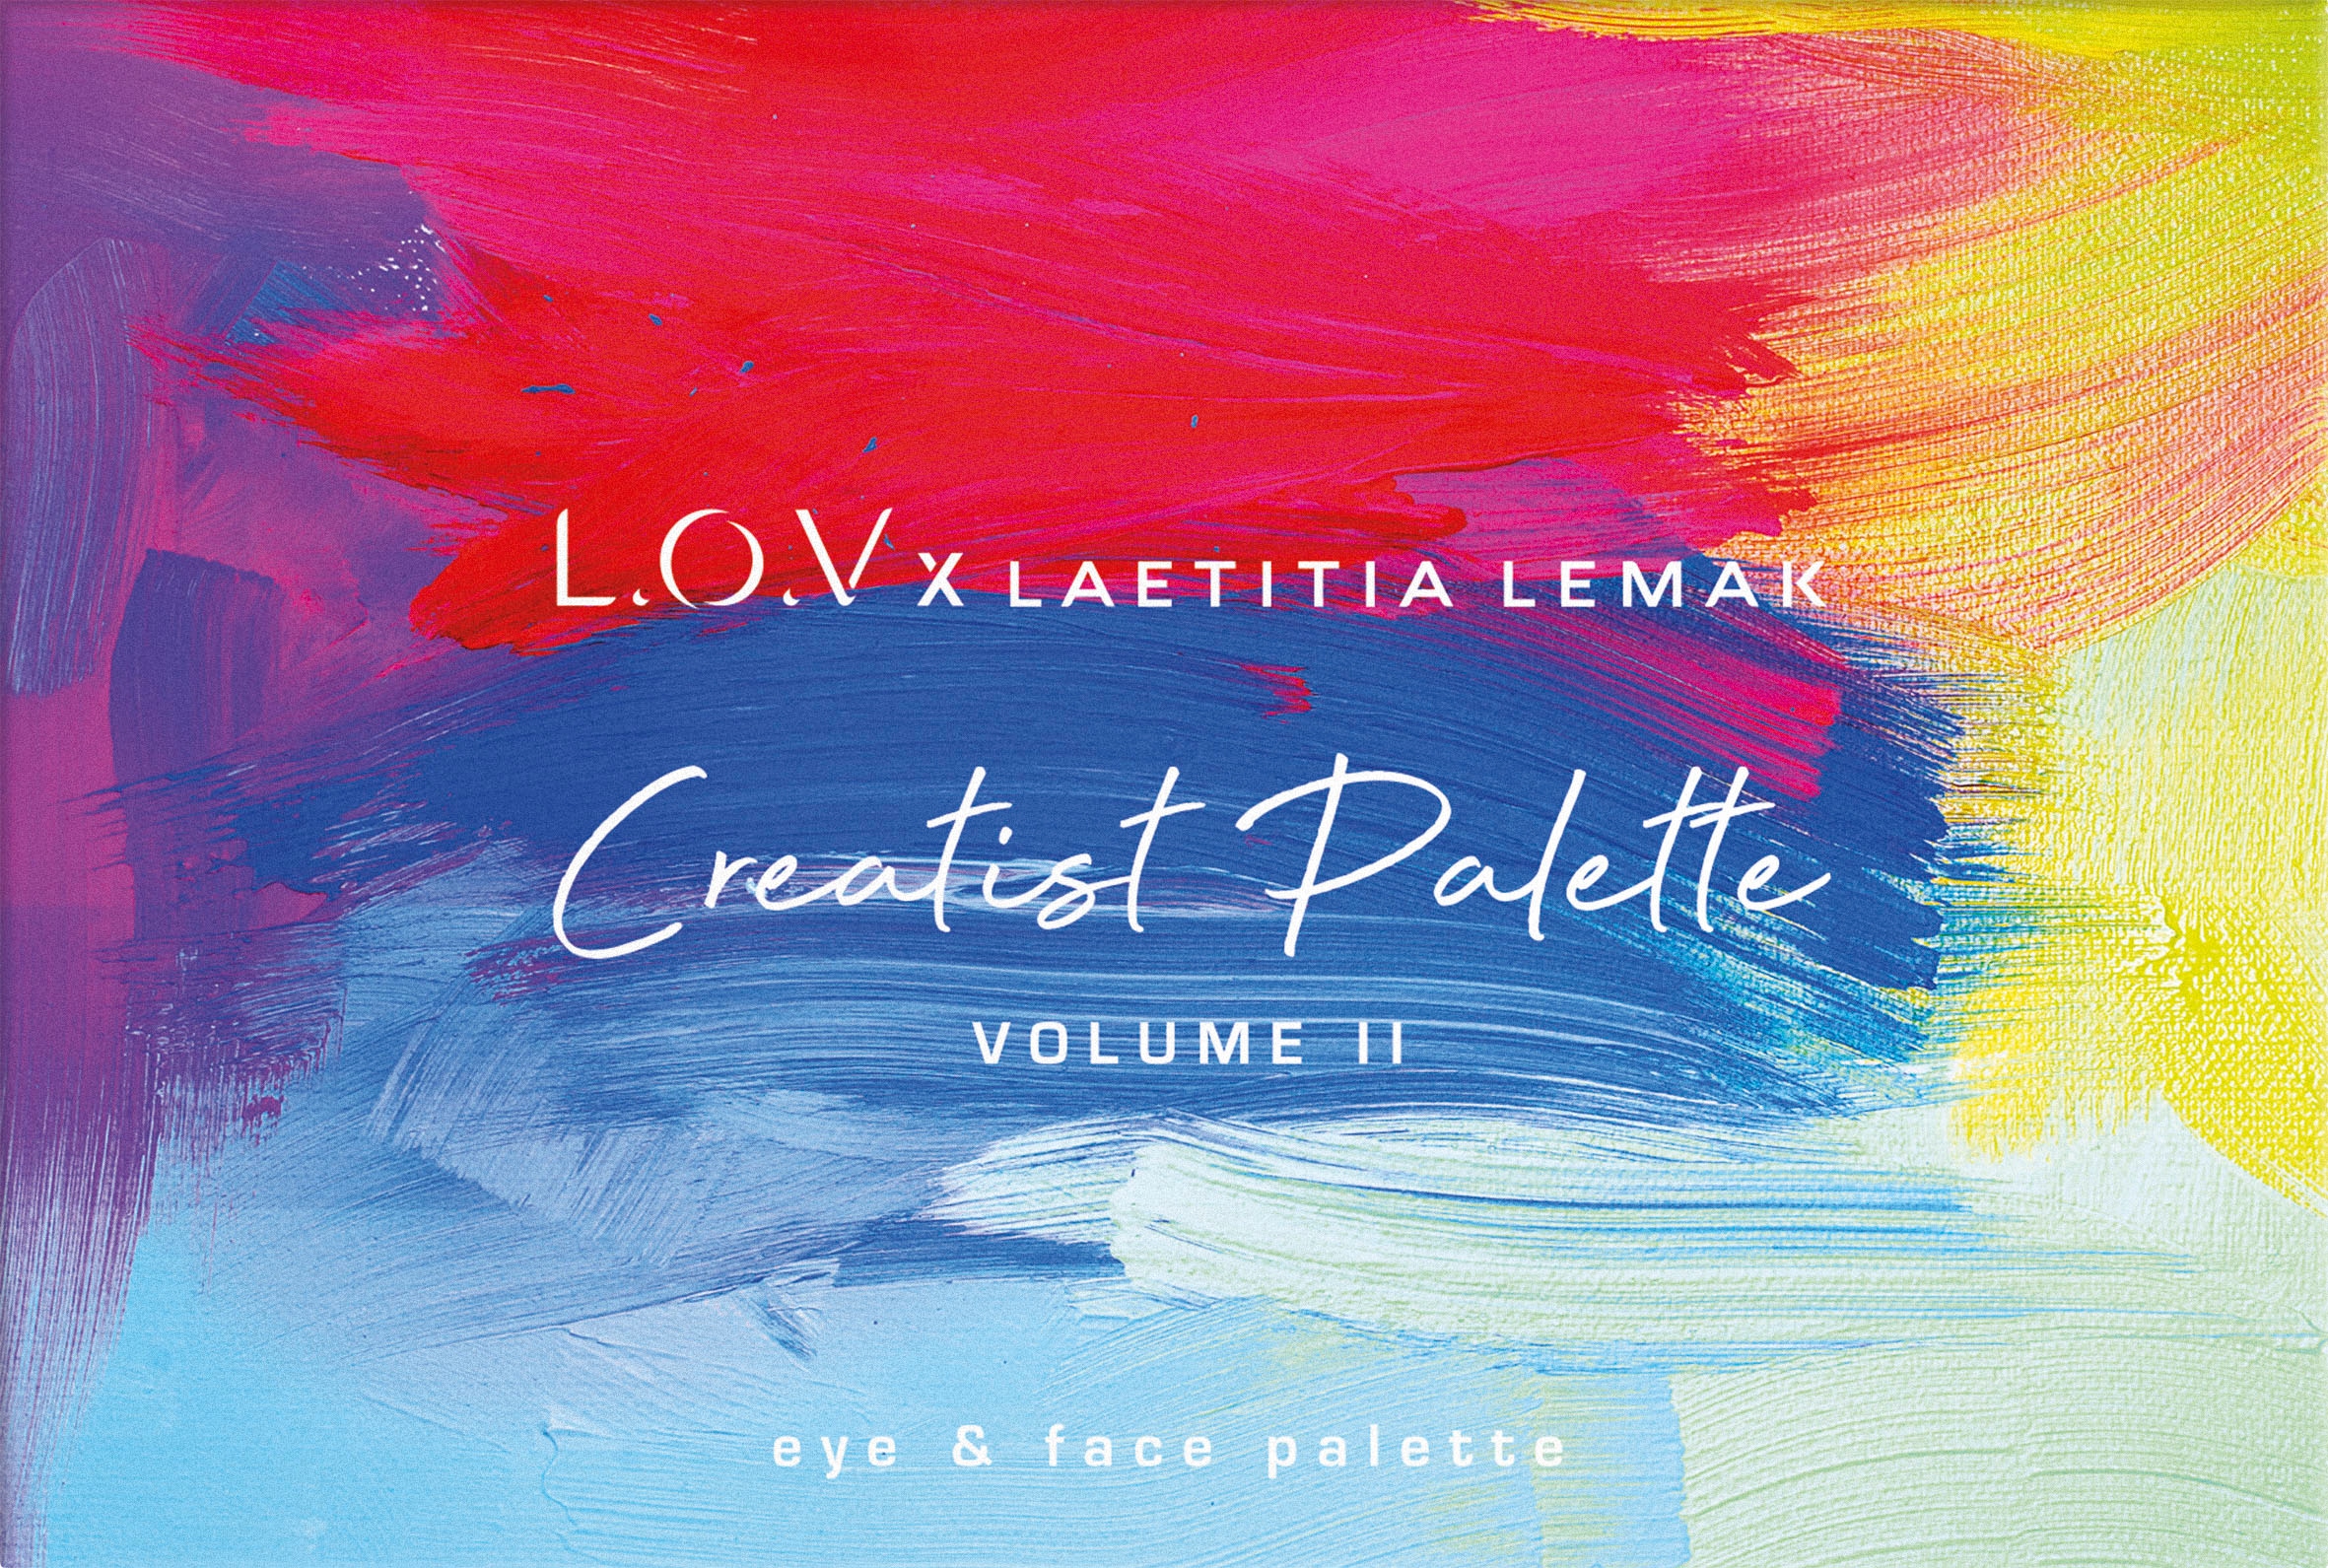 L.O.V Lidschatten-Palette »L.O.V x LAETITIA LEMAK CREATIST PALETTE Volume II eye & face palette«